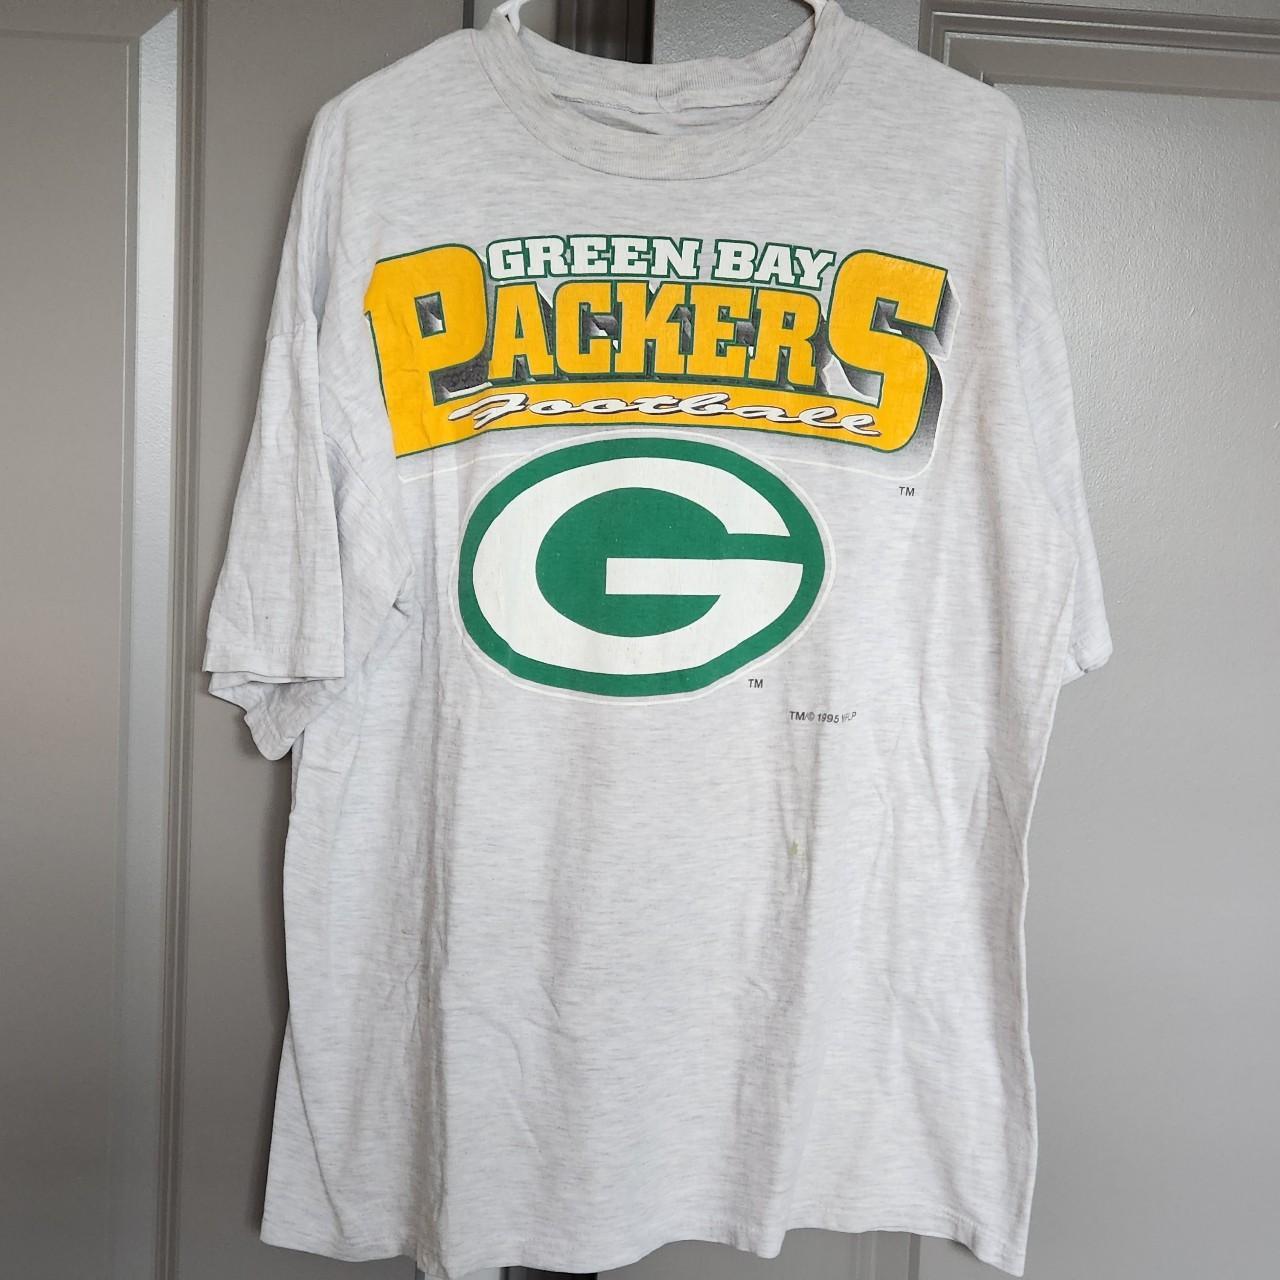 Vintage Greenbay Packers T Shirt, Green Bay Packers Tee